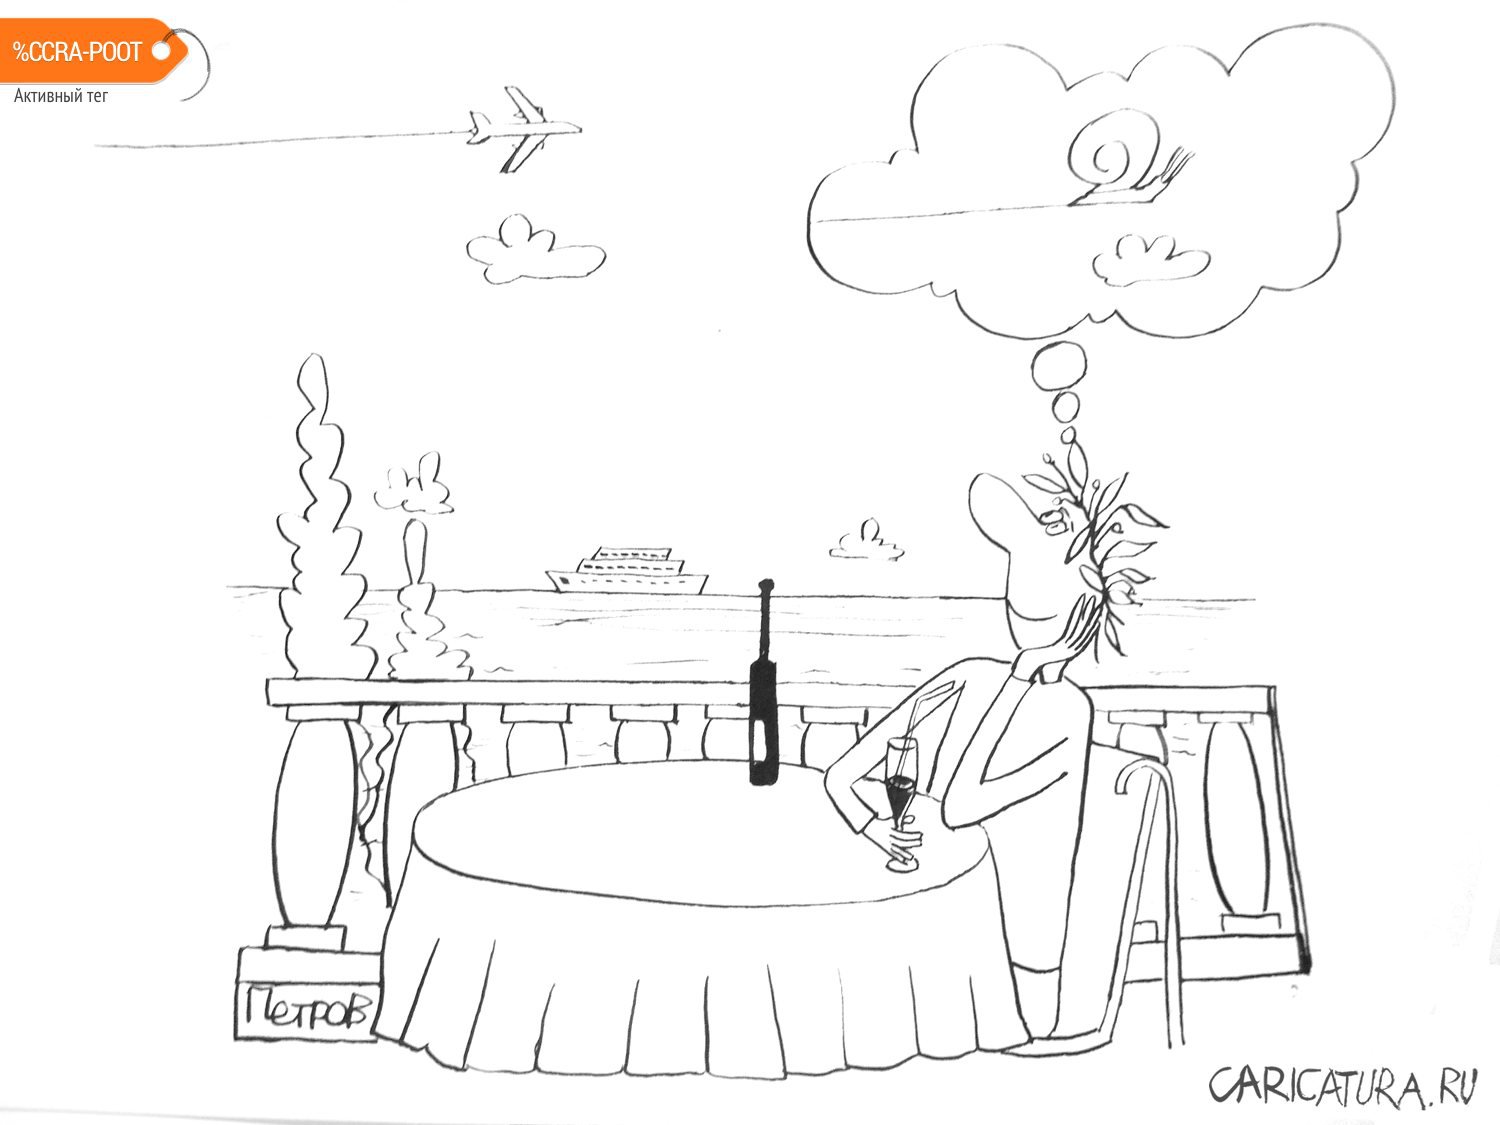 Карикатура "Поэт на курорте", Александр Петров